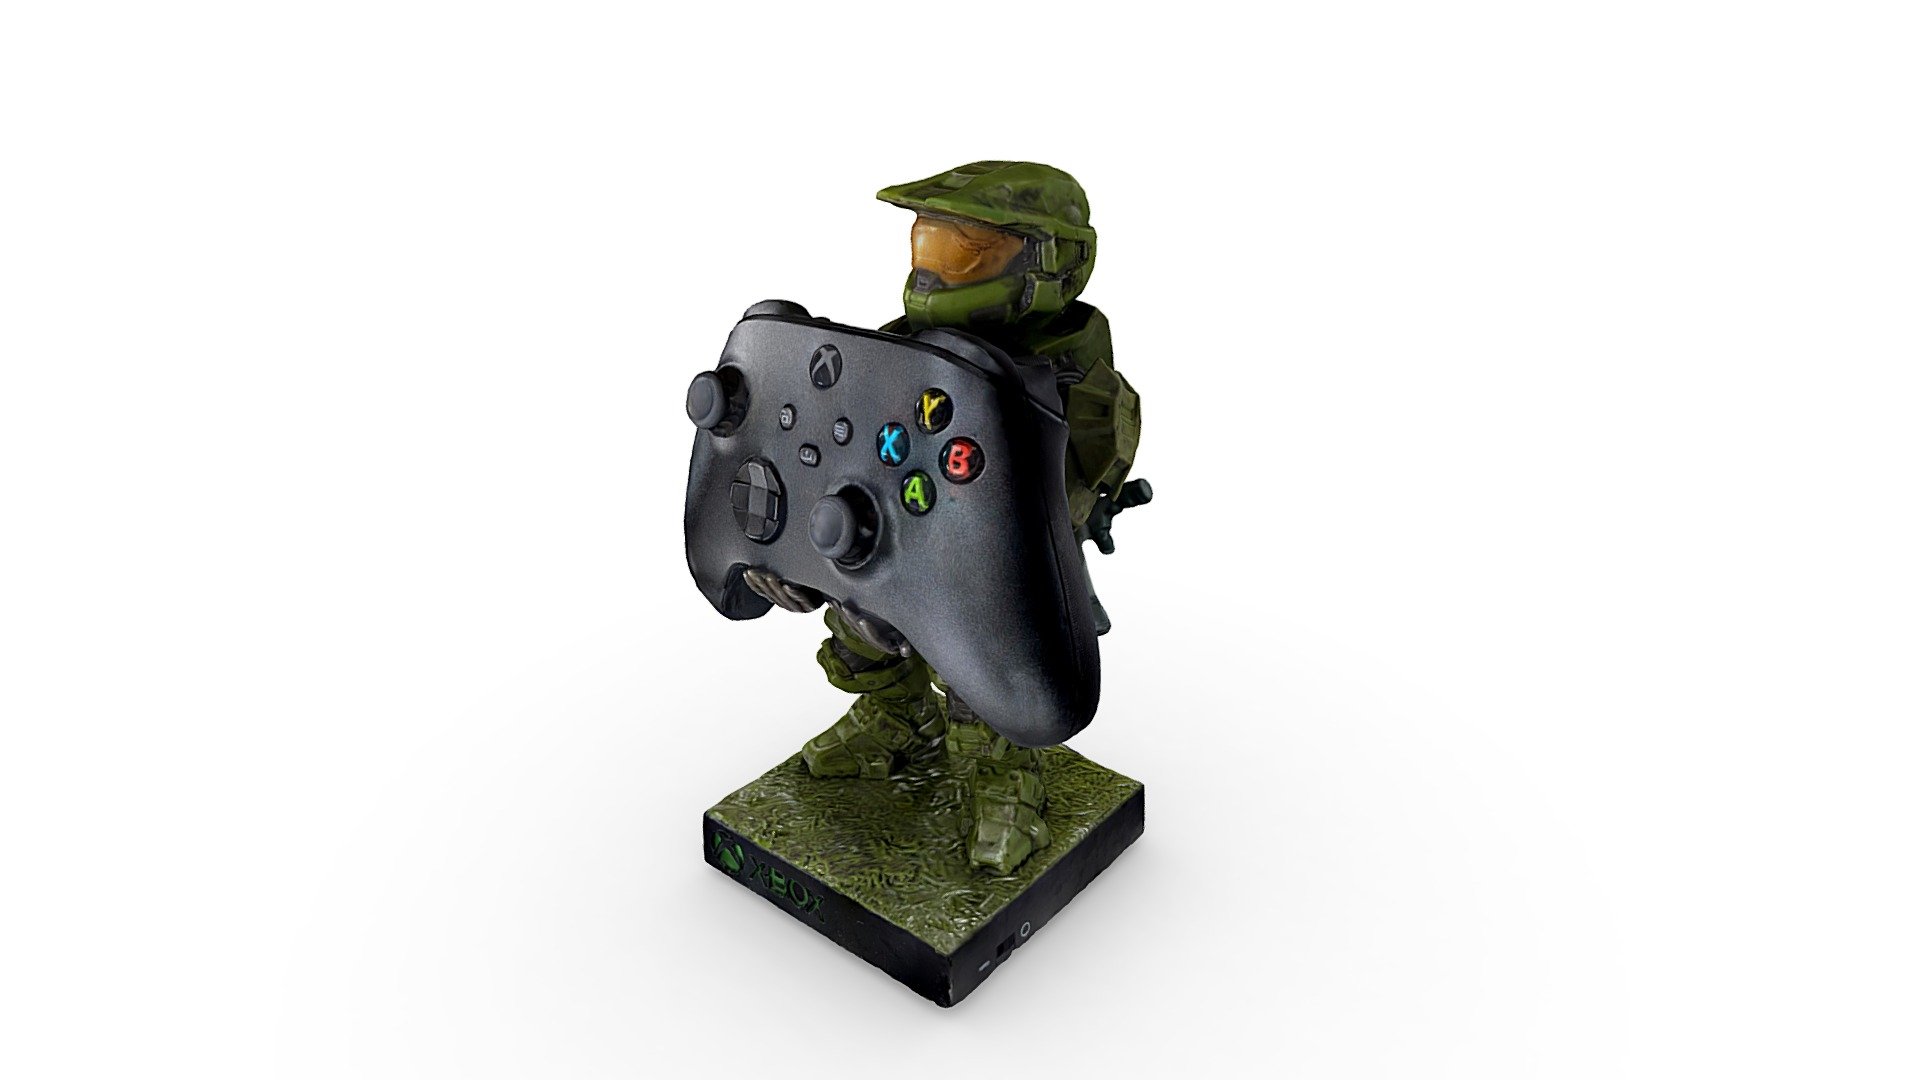 Cable Guy Halo Infinite Xbox Controller holder - Halo Infinite - Master Chief Controller Holder - 3D model by makeitmovemedia 3d model